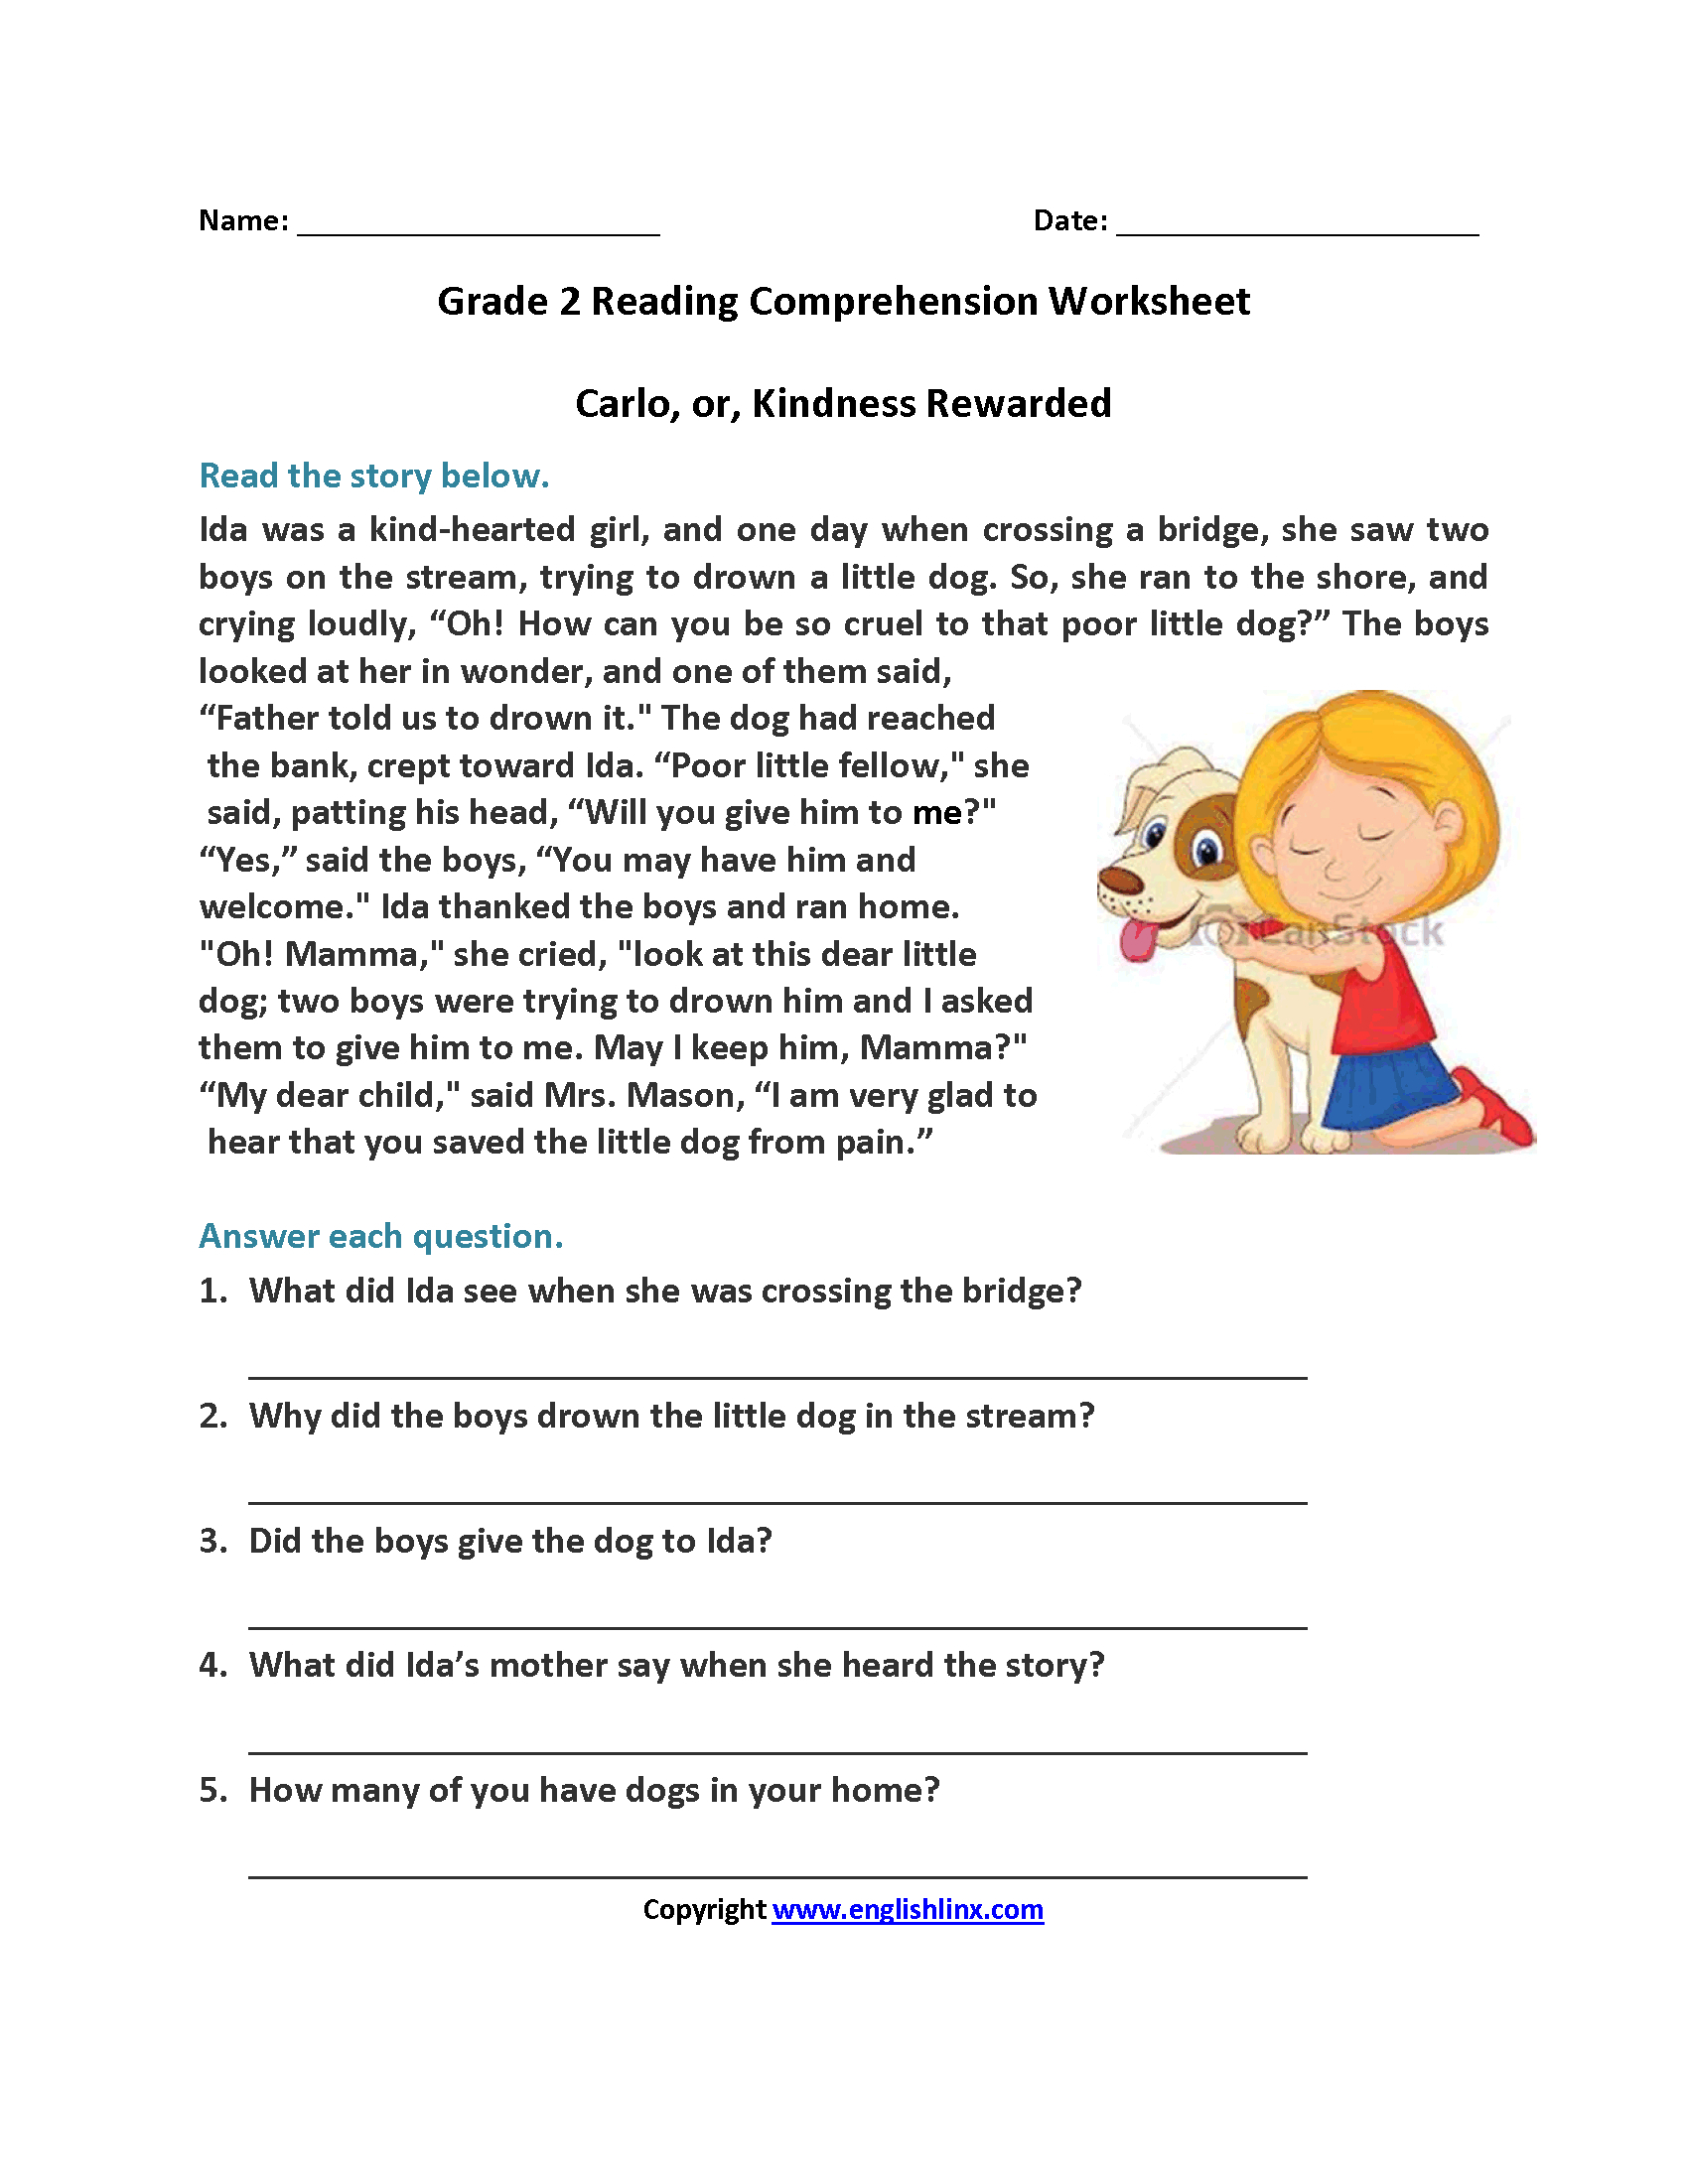 Carlo Or Kindness Rewarded Second Grade Reading Worksheets | Reading | Free Printable Reading Comprehension Worksheets Grade 5